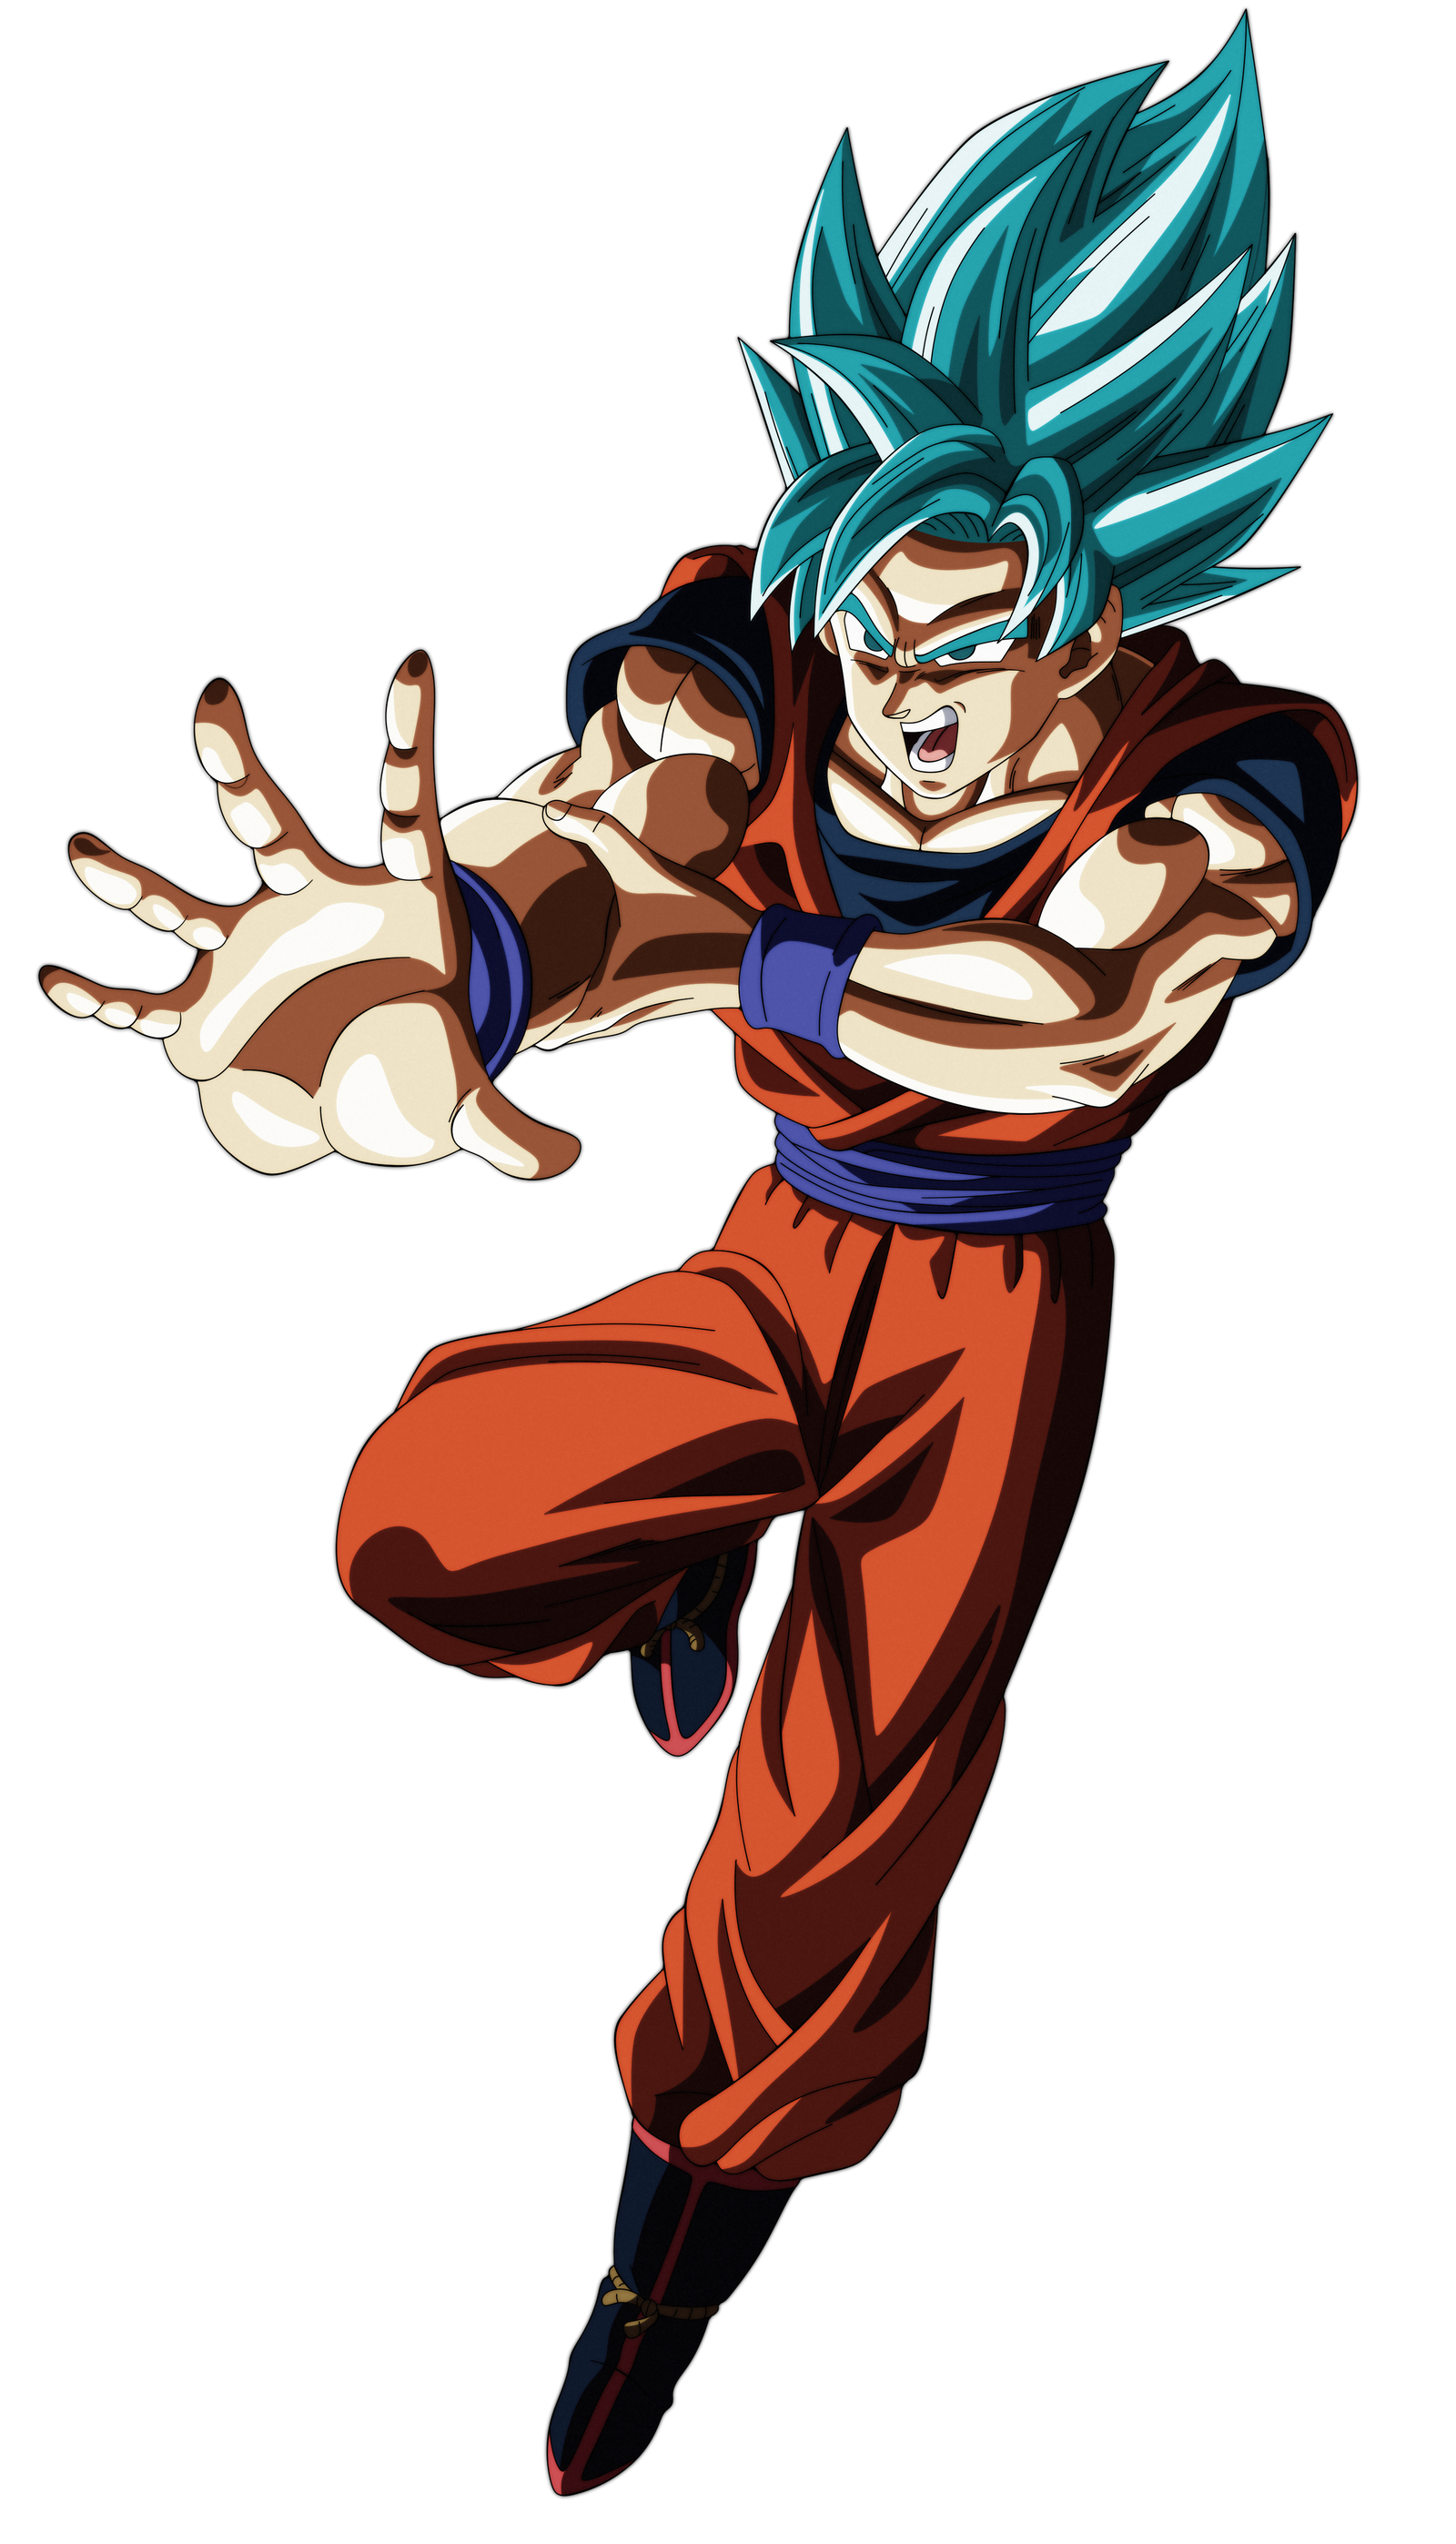 Goku Ssj Blue, Dragon Ball Super Son Goku Super Saiyan Blue illustration  transparent background PNG clipart